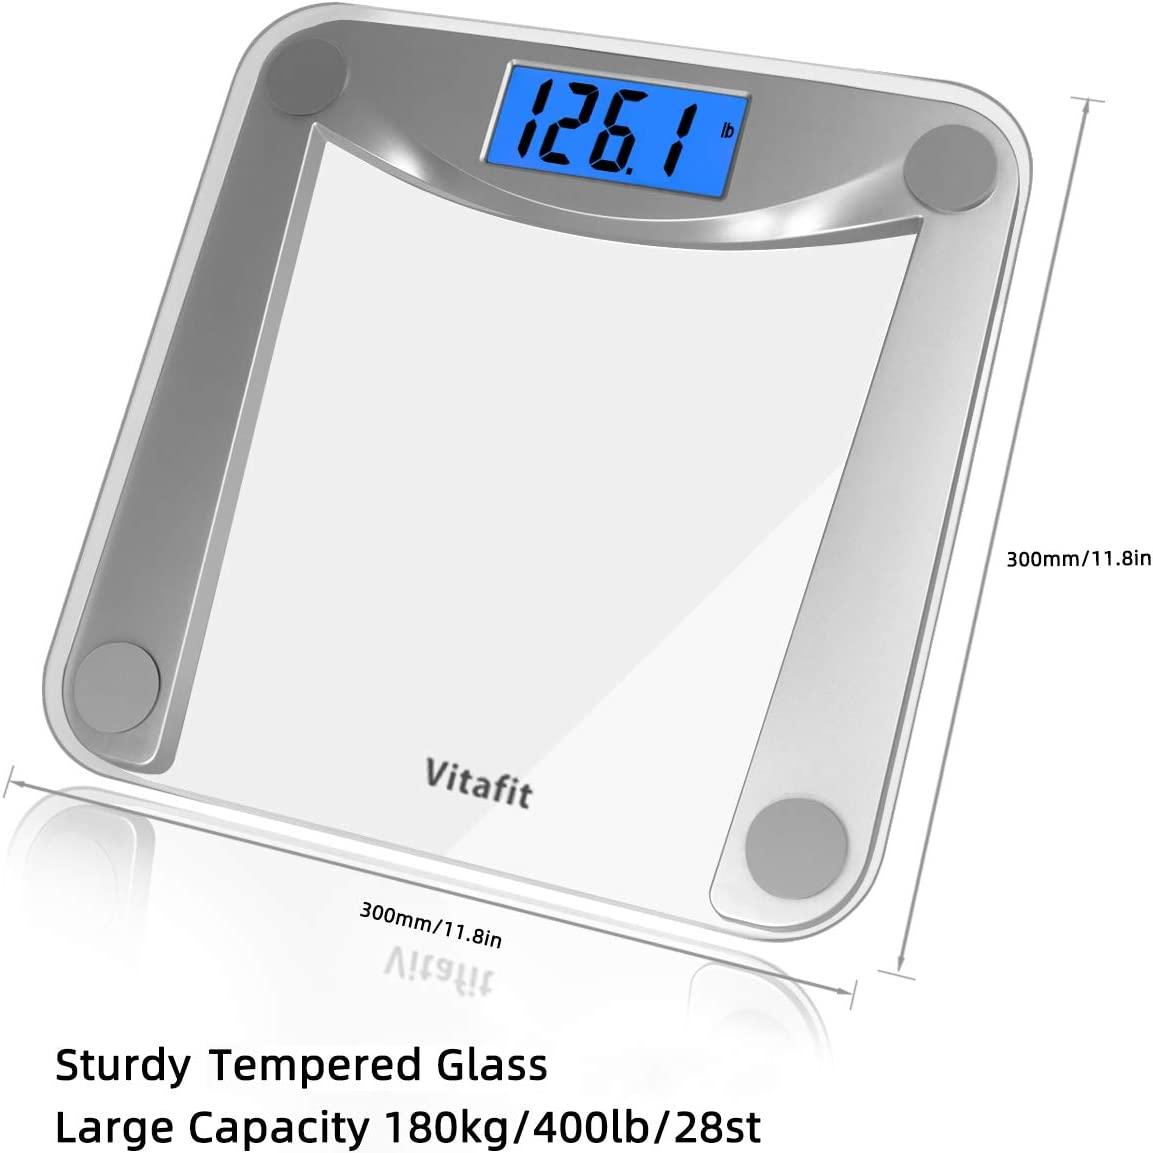  Vitafit Anti-Slip Smart Digital Bathroom Scale for Body